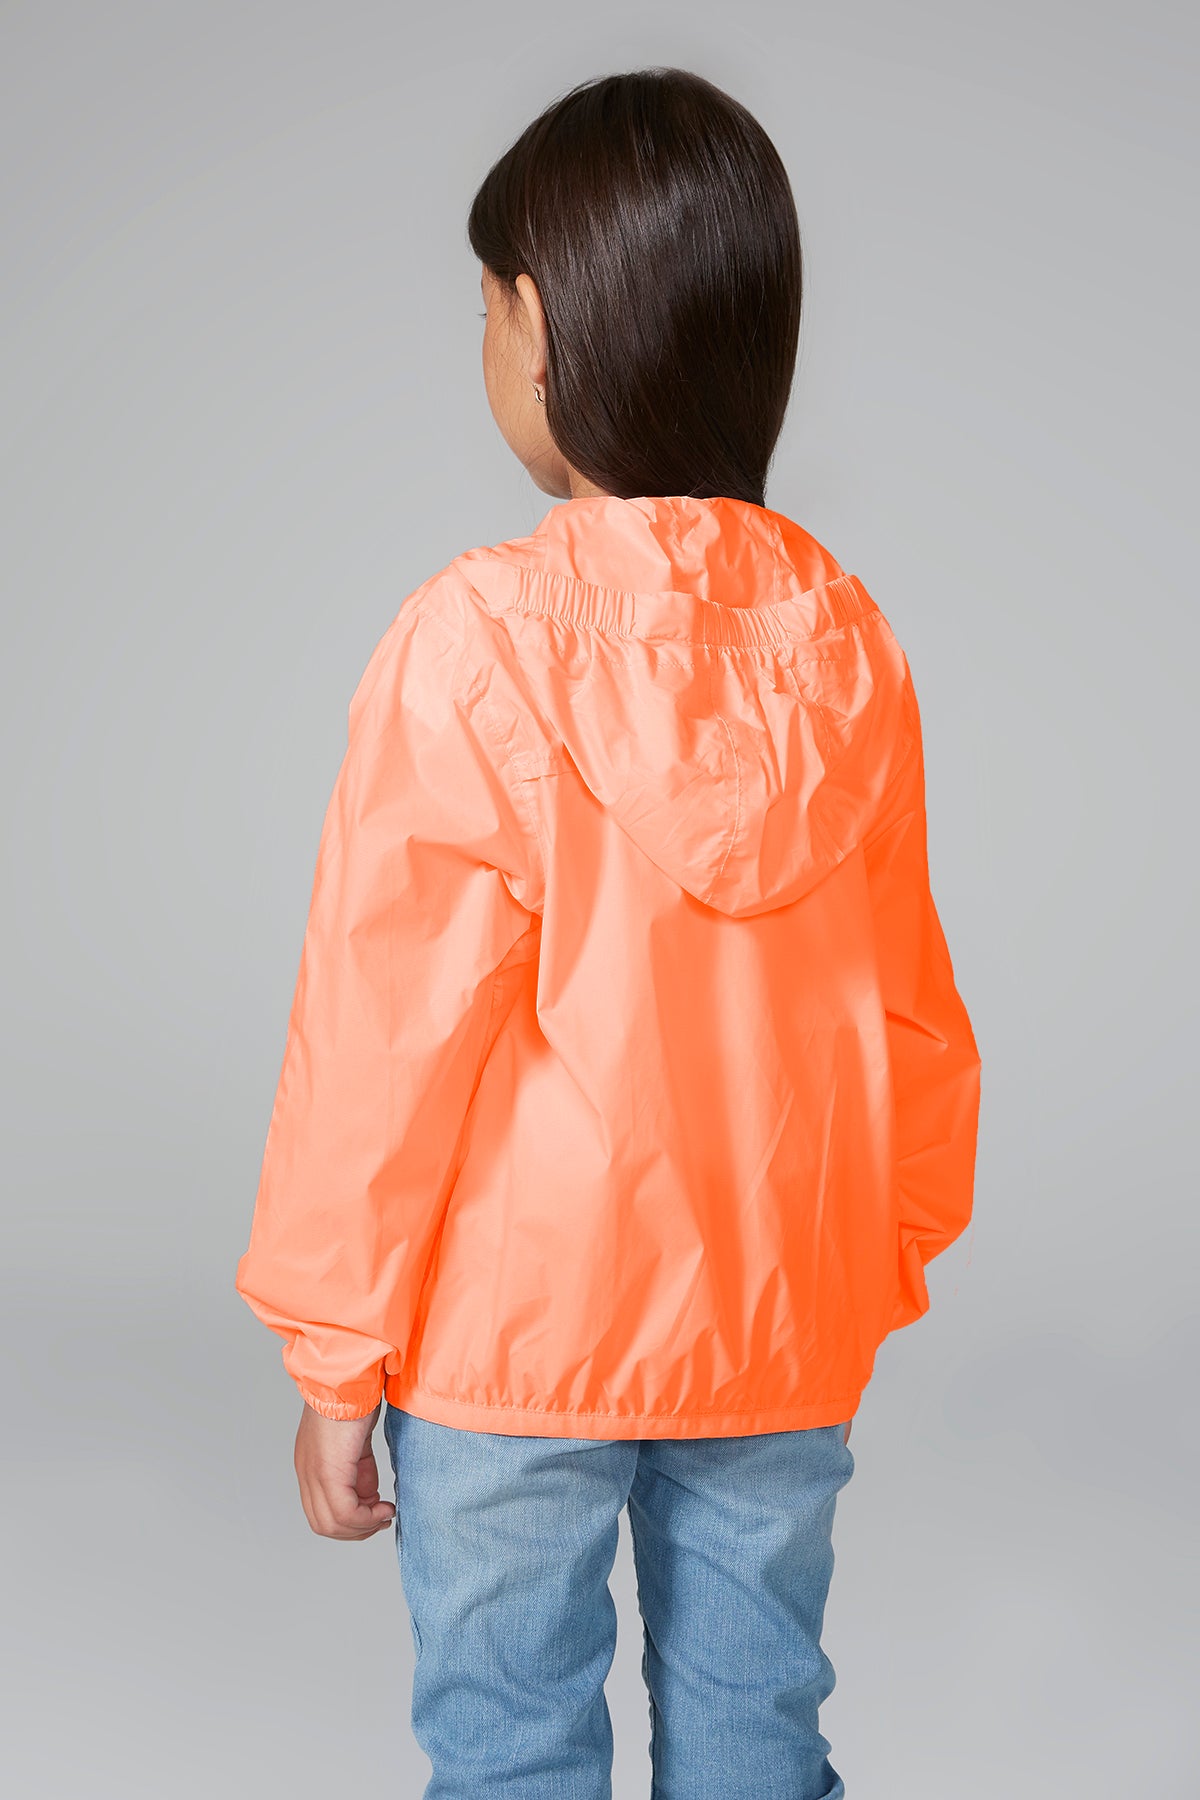 Sam - kids orange fluo full zip packable rain jacket - O8lifestyle.